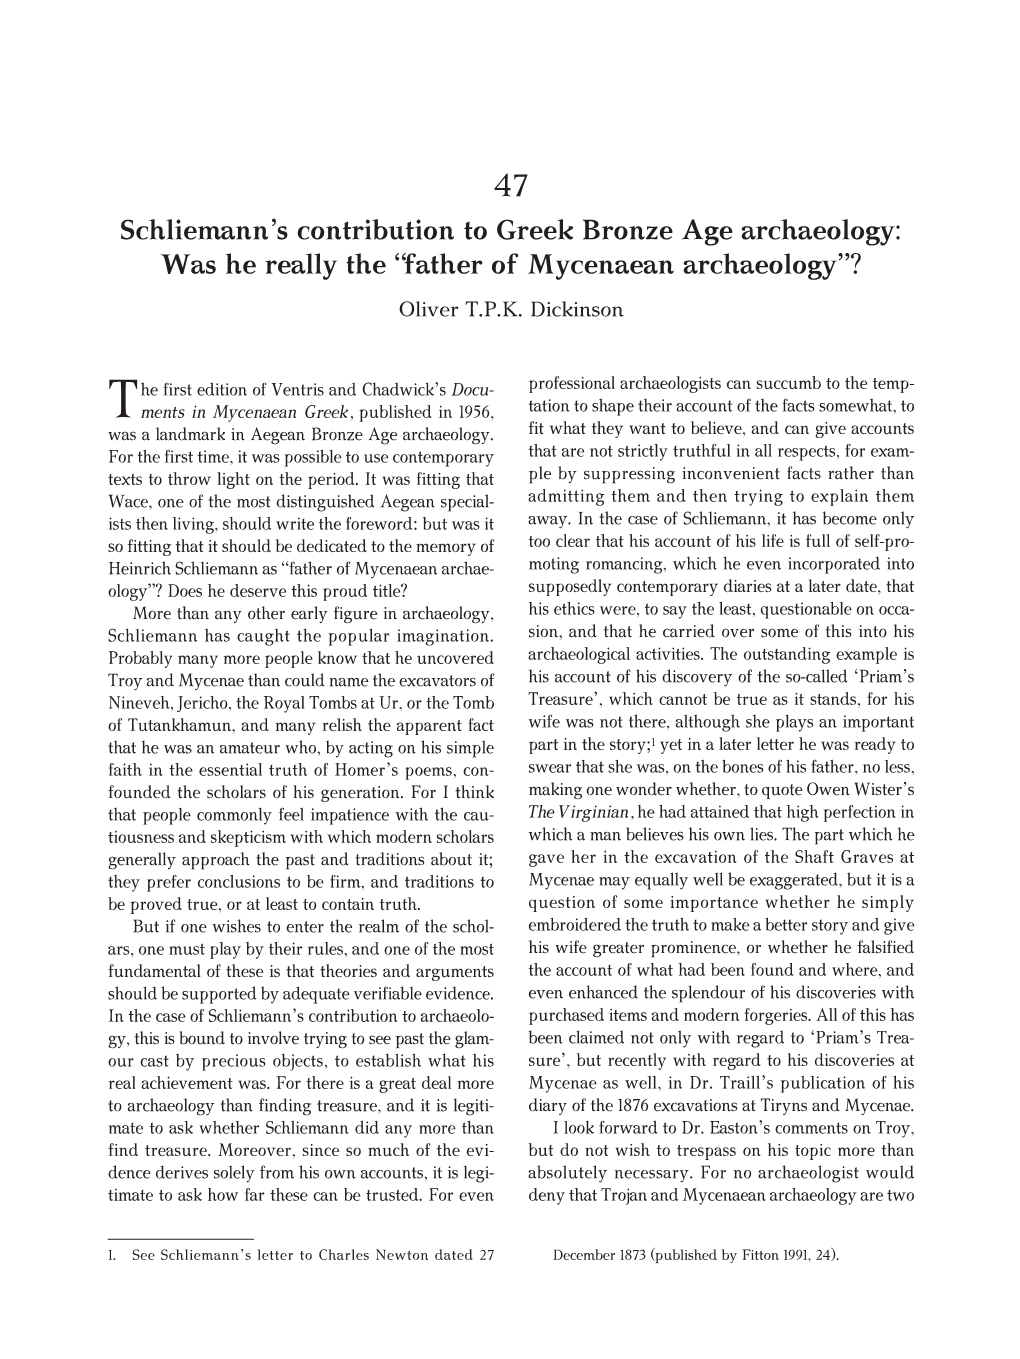 Schliemann's Contribution to Greek Bronze Age Archaeology